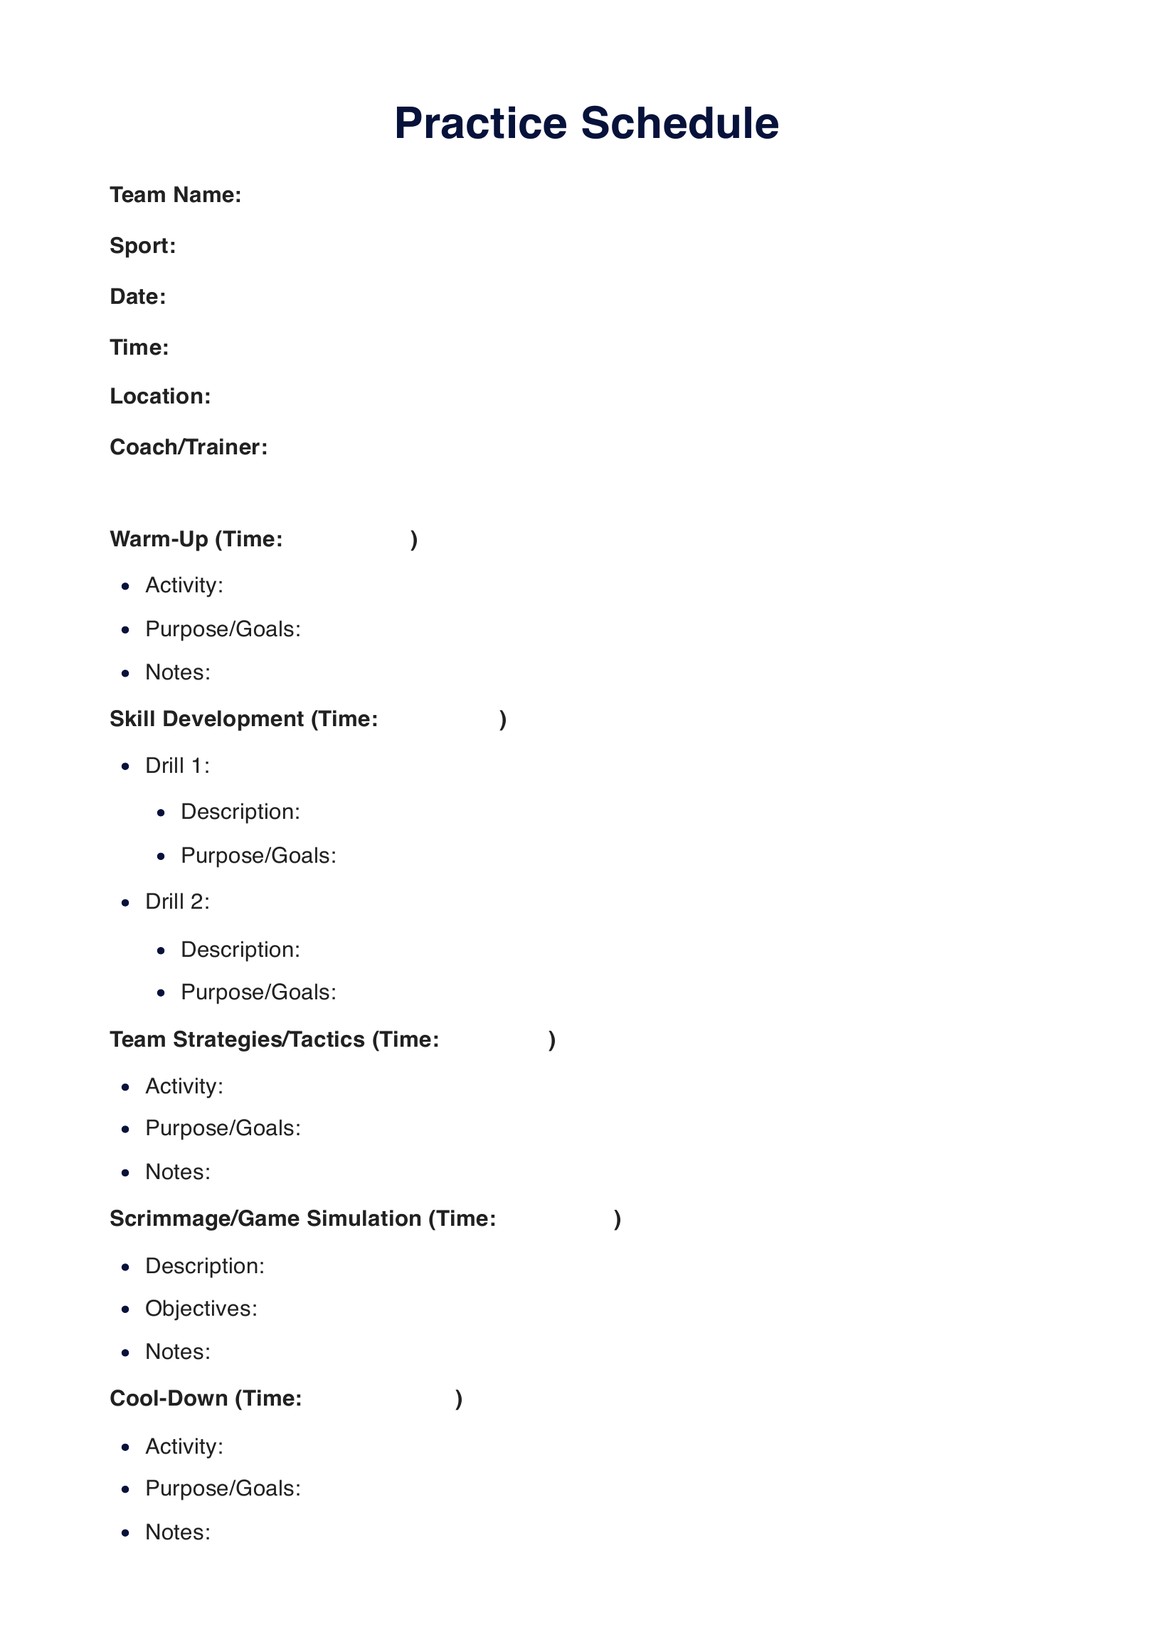 Practice Schedule Template PDF Example